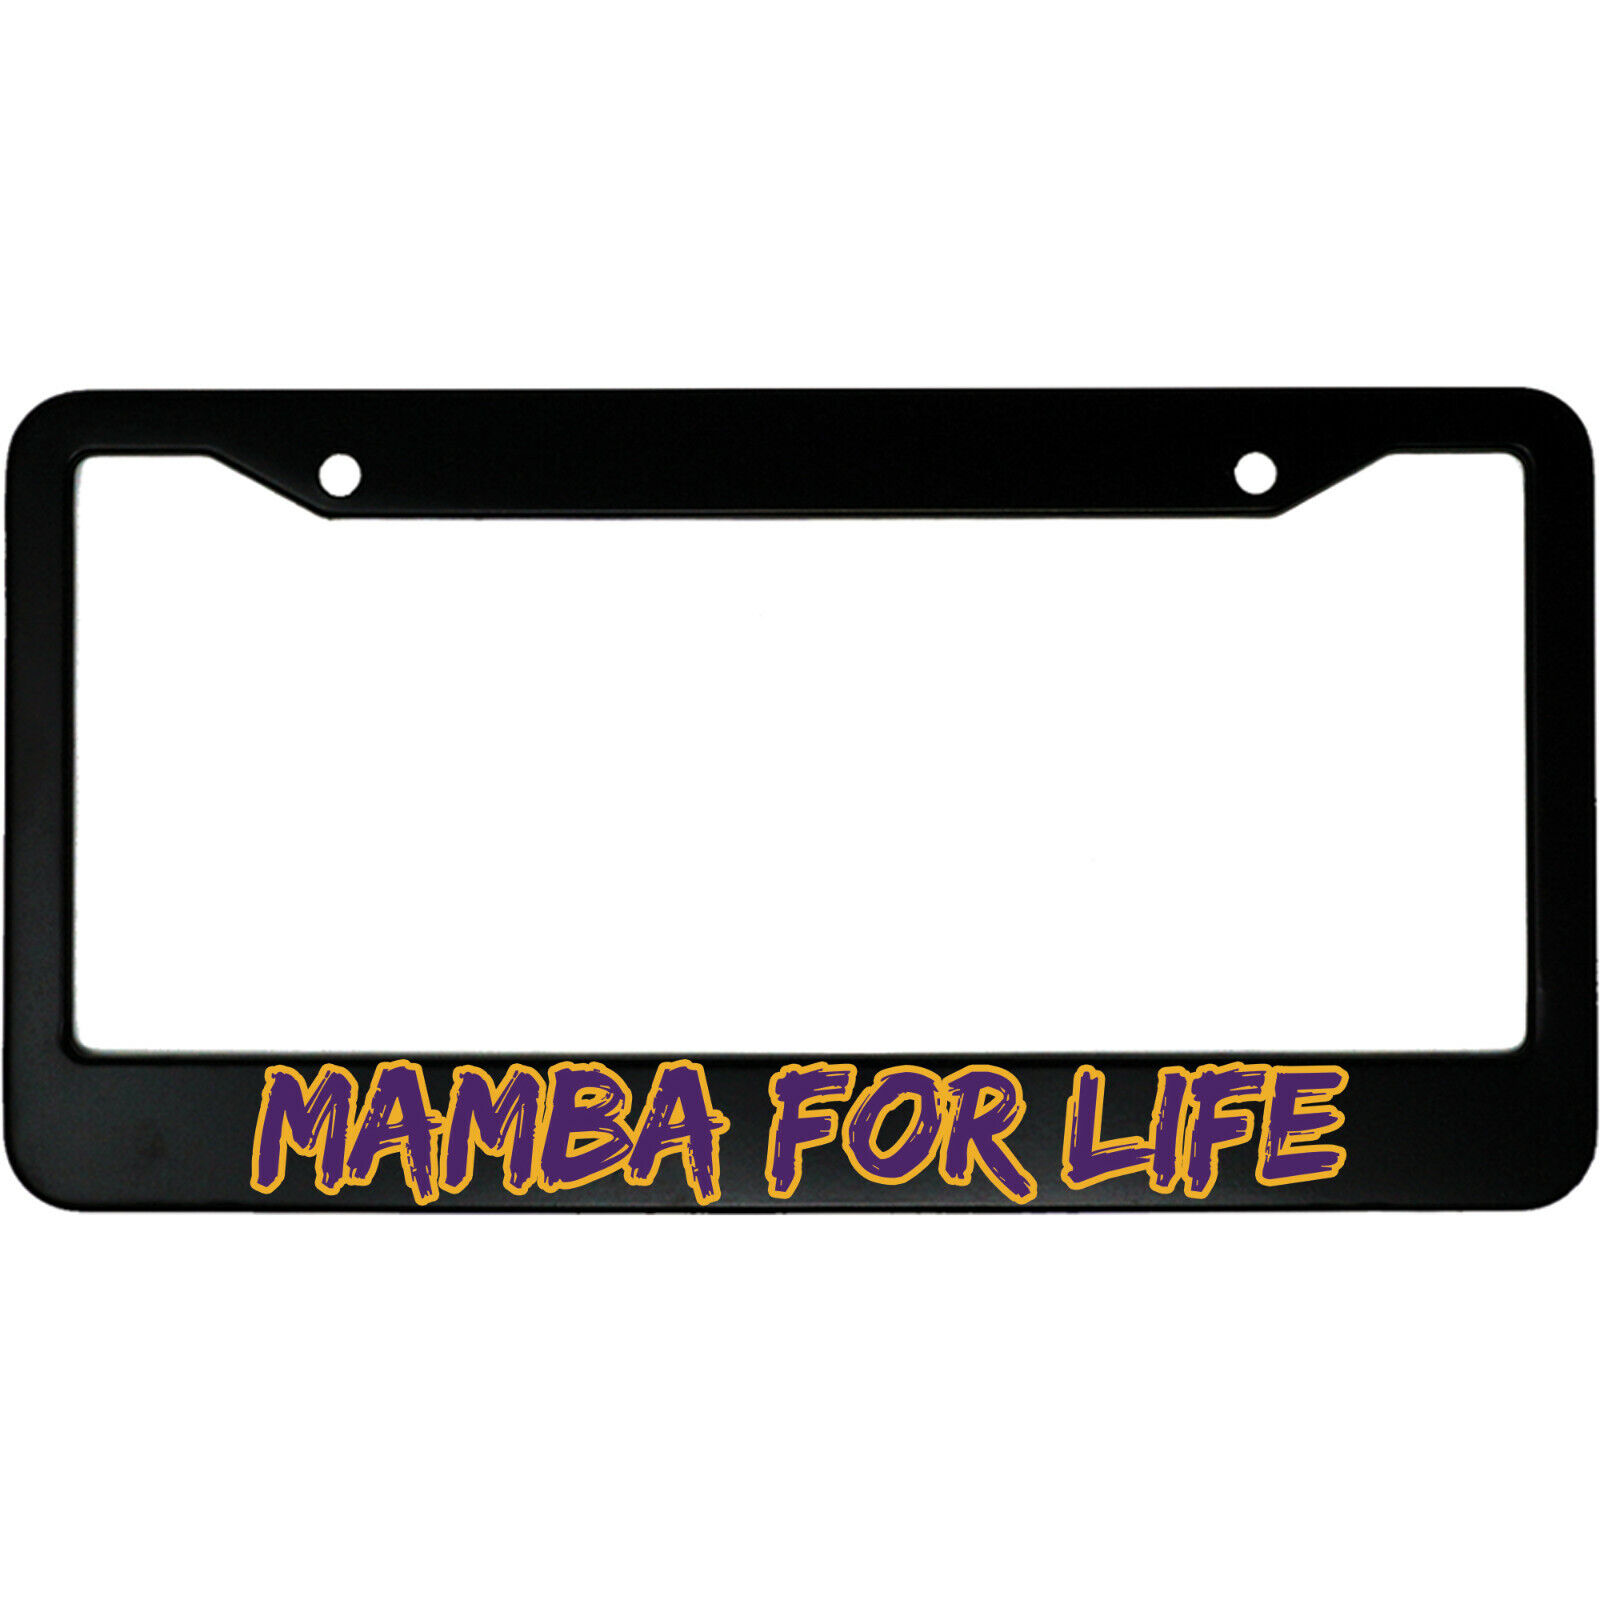 Mamba For Life Aluminum Car License Plate Frame